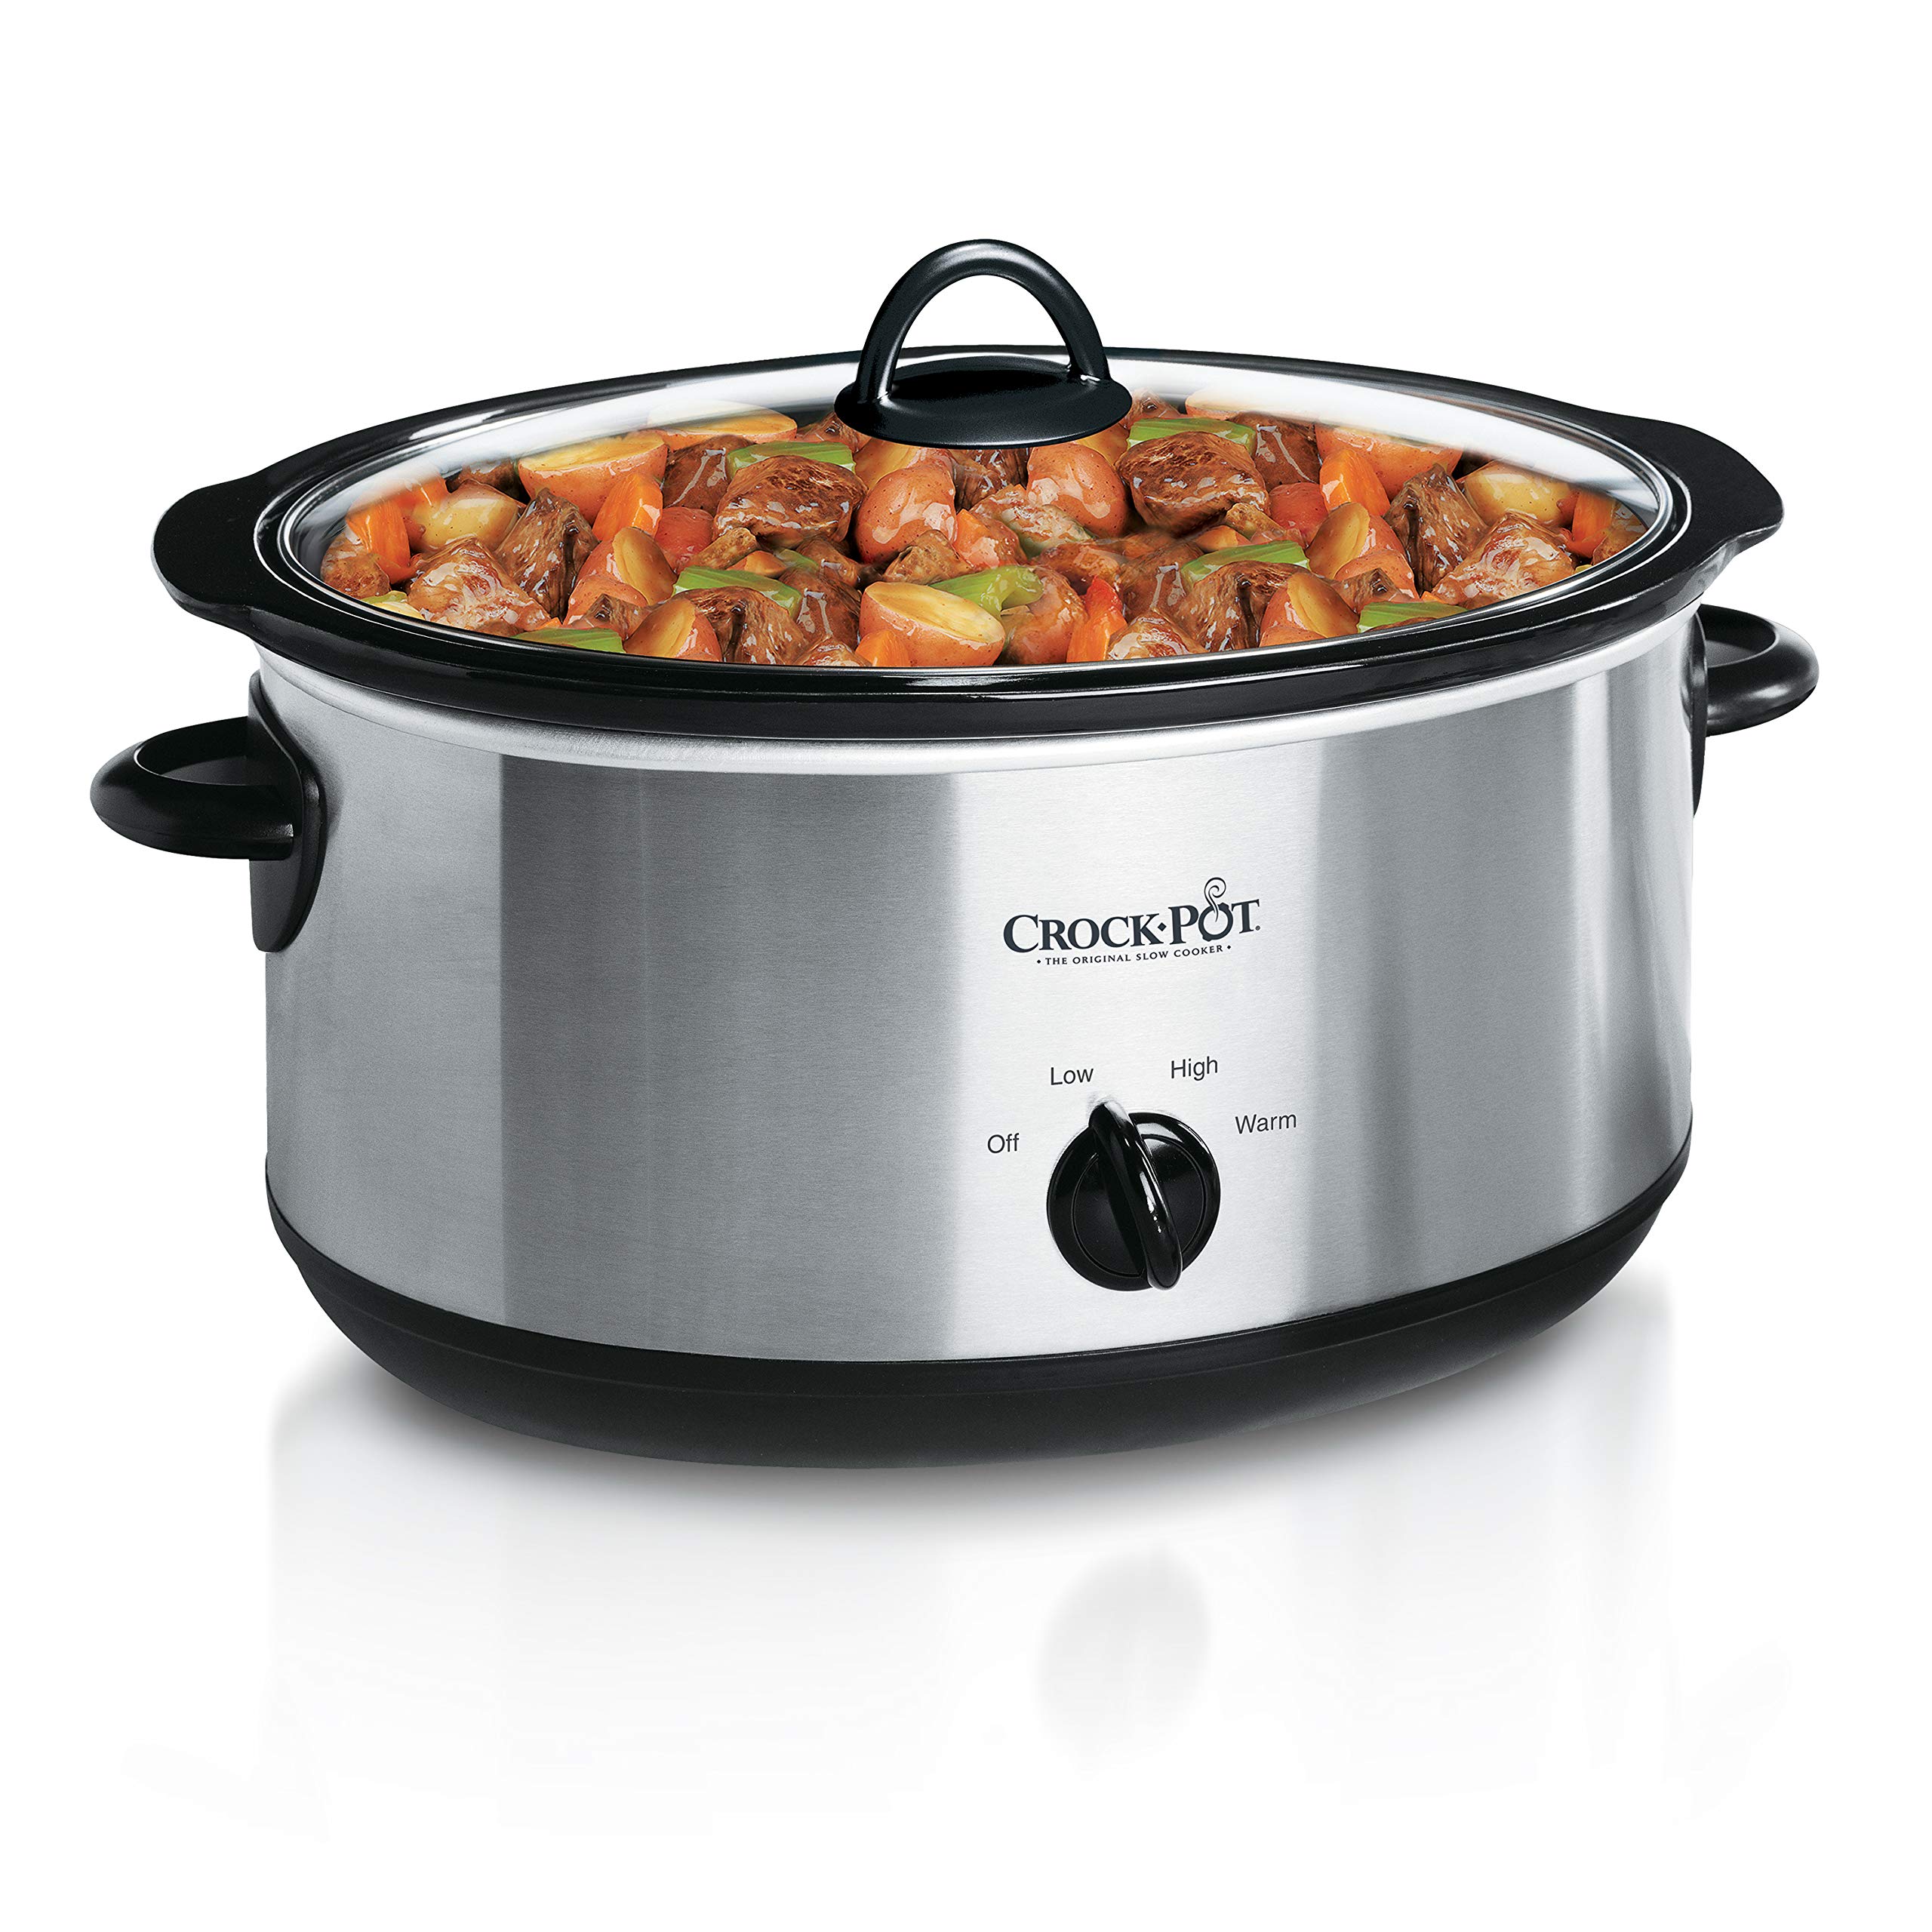 Crock-Pot 7 Quart Oval Manual Slow Cooker (Stainless Steel) - $30 via Amazon